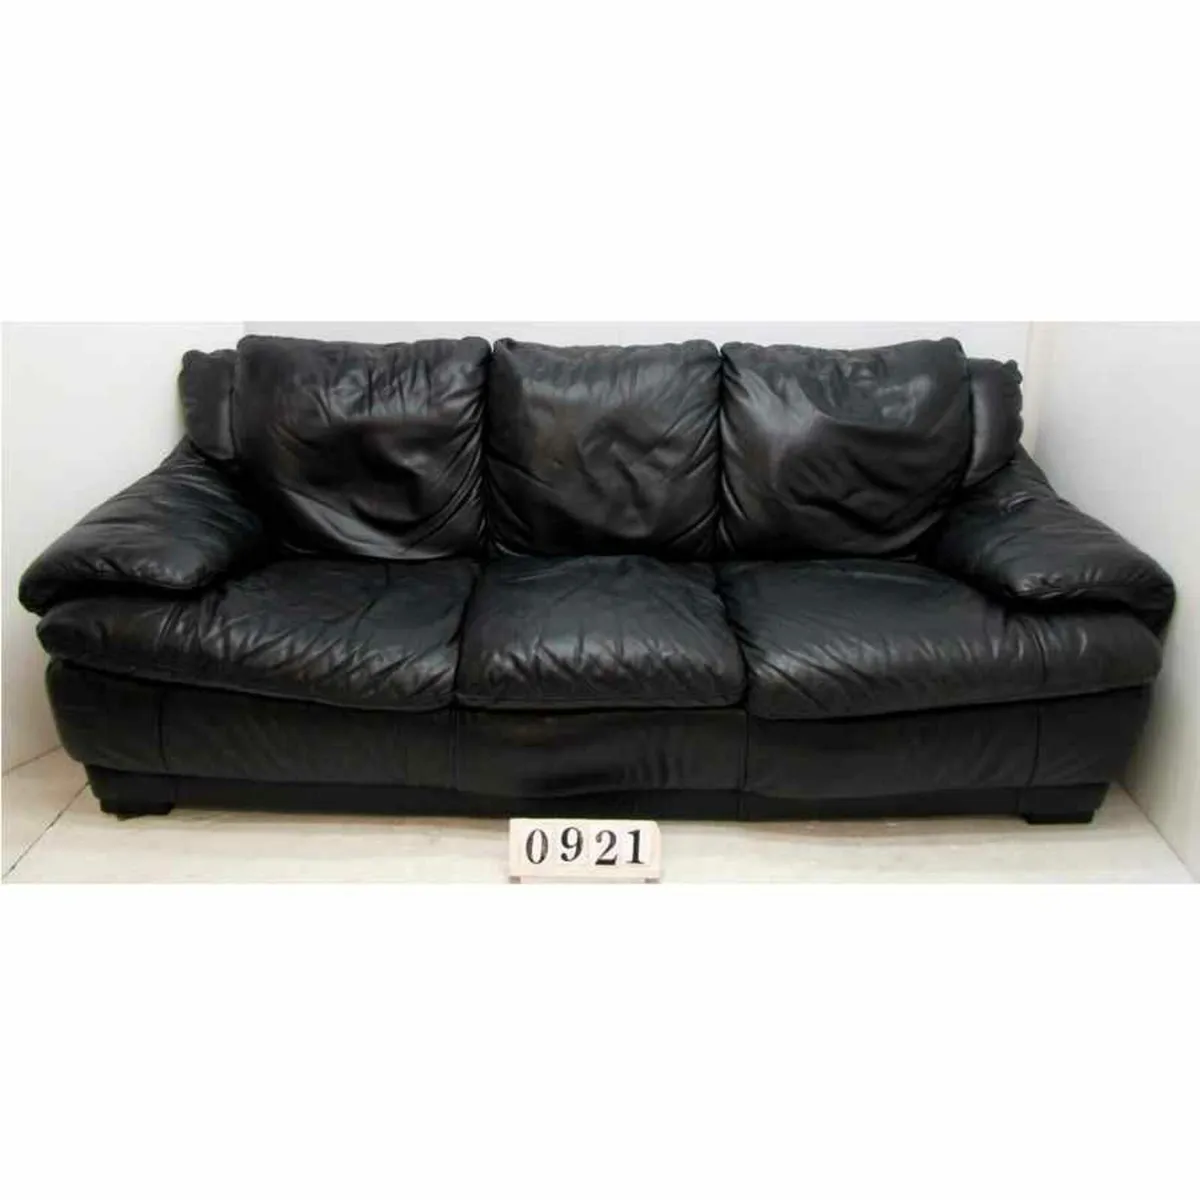 Large black leather three seater sofa.   #0921